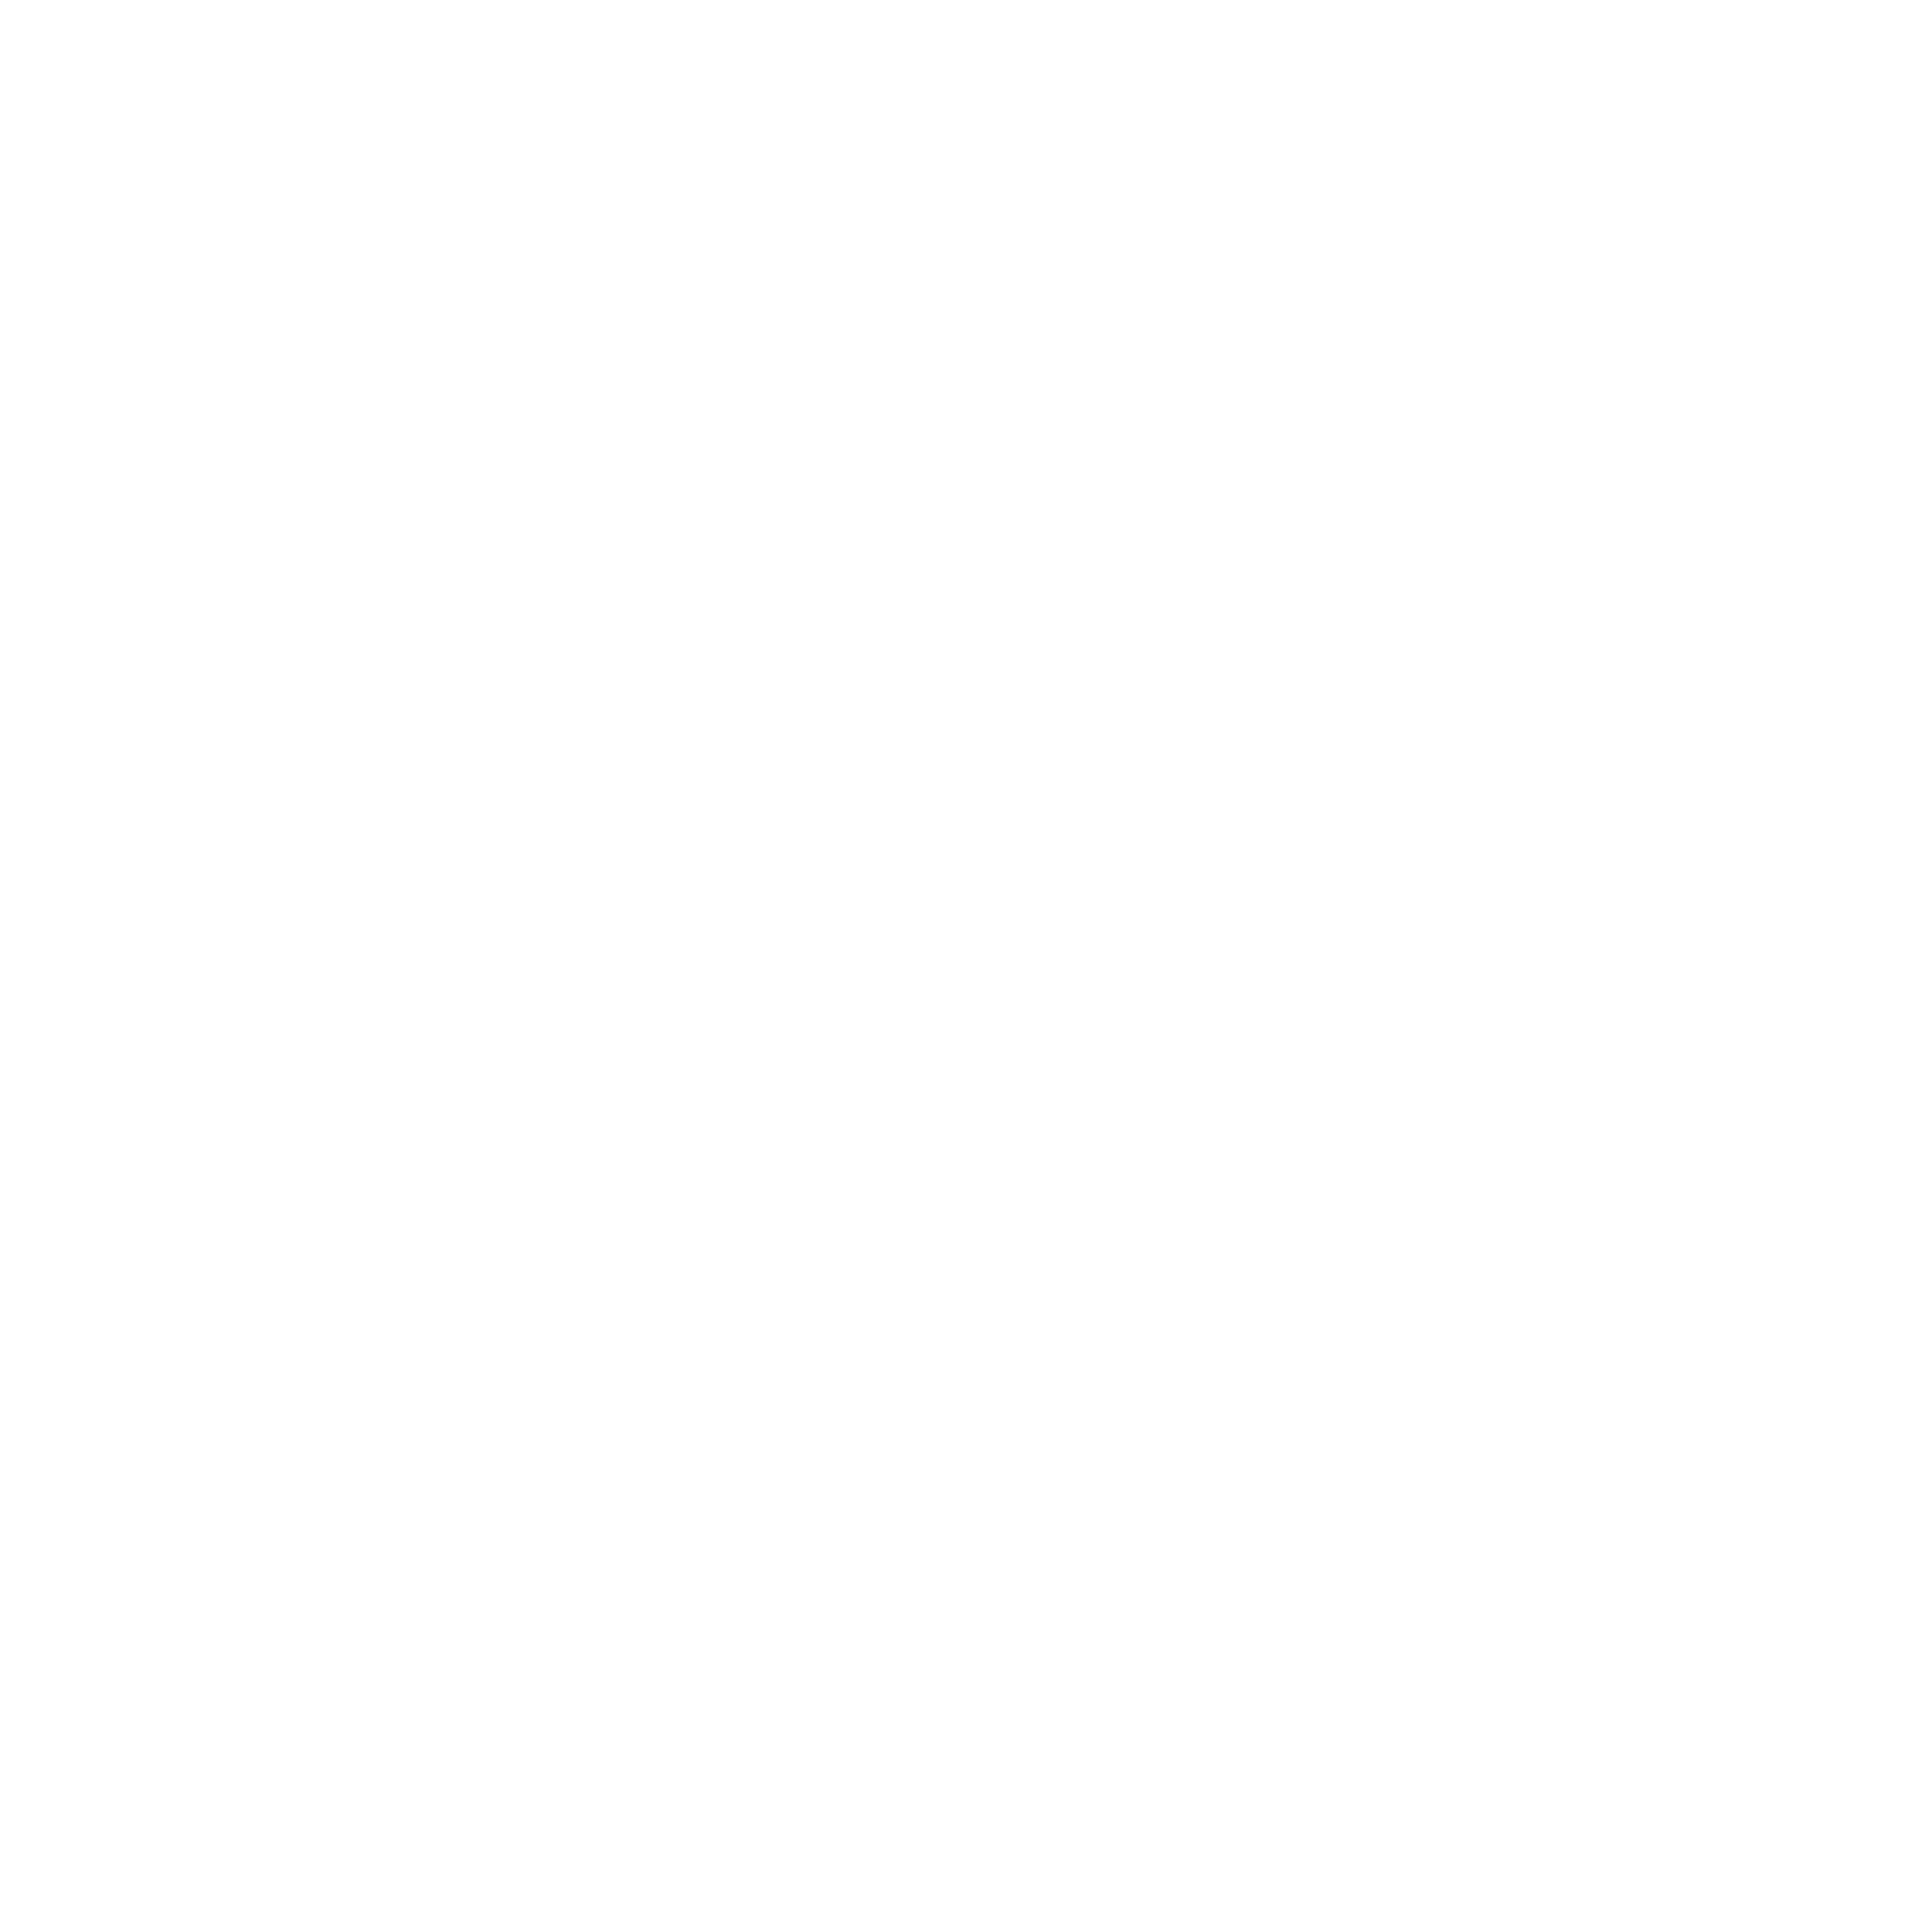 Komatsu Logo - Komatsu Logo PNG Transparent & SVG Vector - Freebie Supply